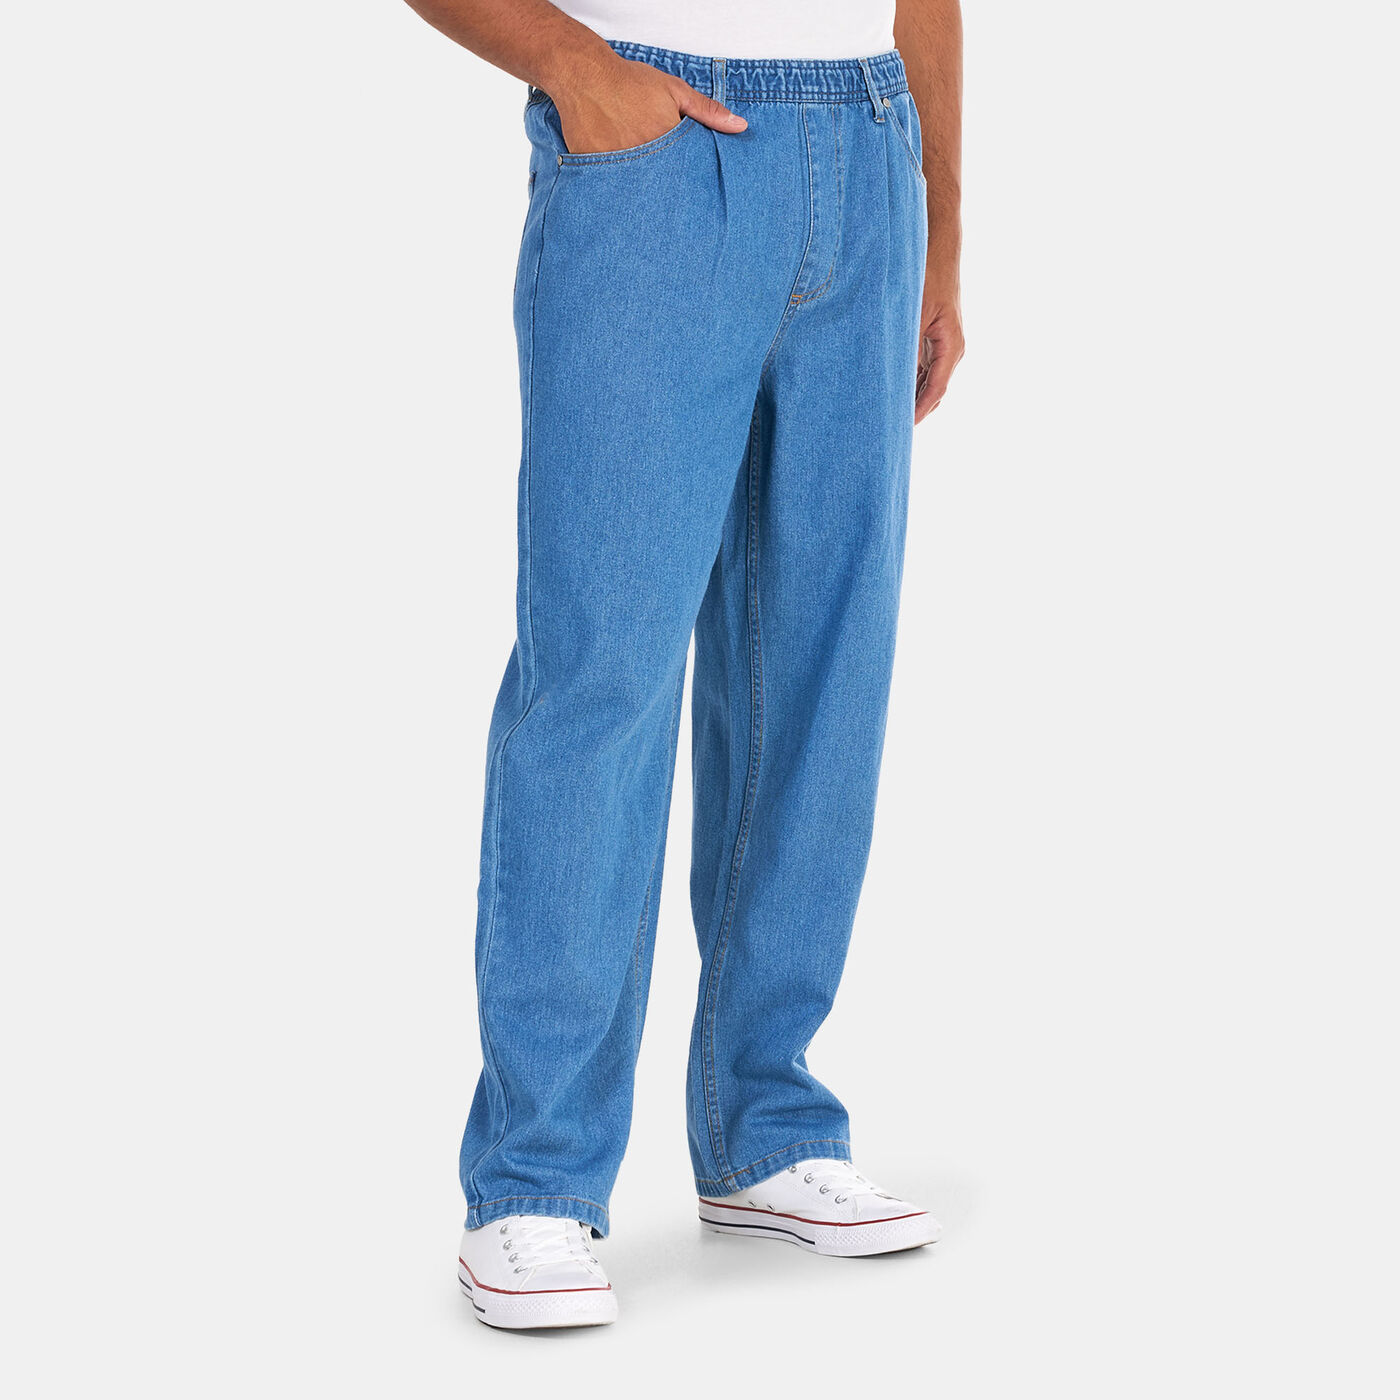 Men's 5 Pocket Baggy Pant Denim Pants